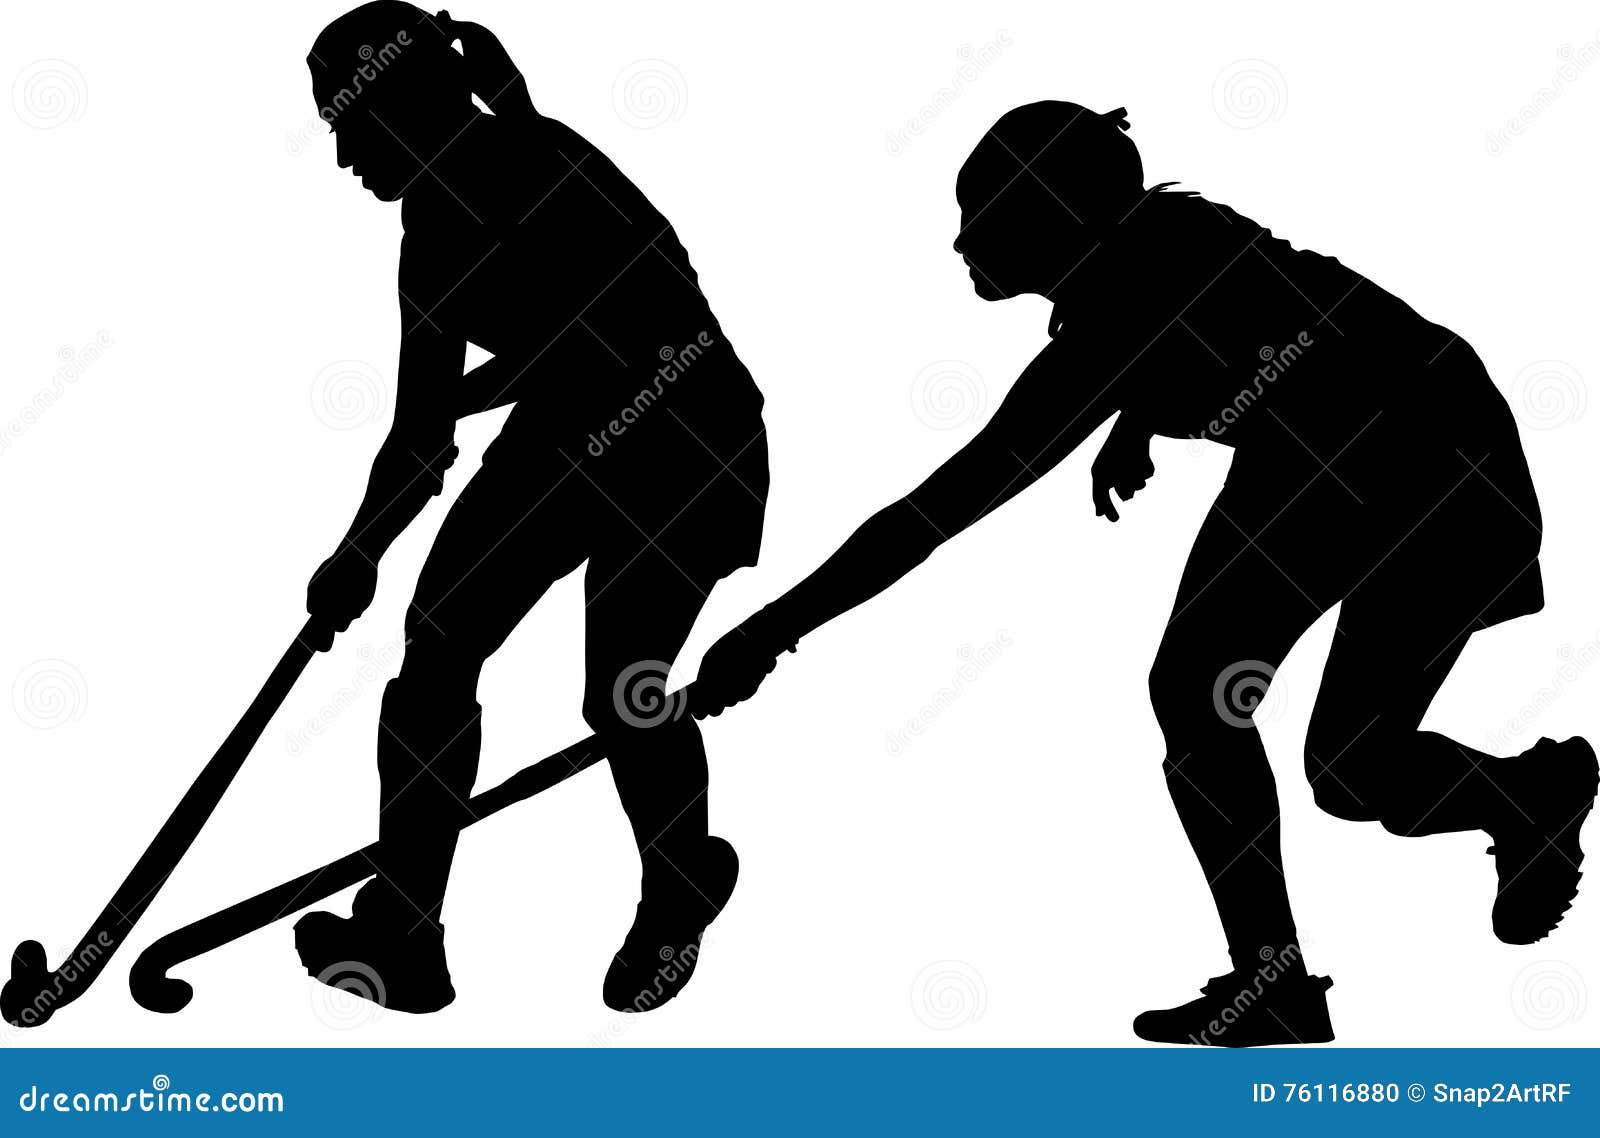 silhouette of girl hockey players battling for possession